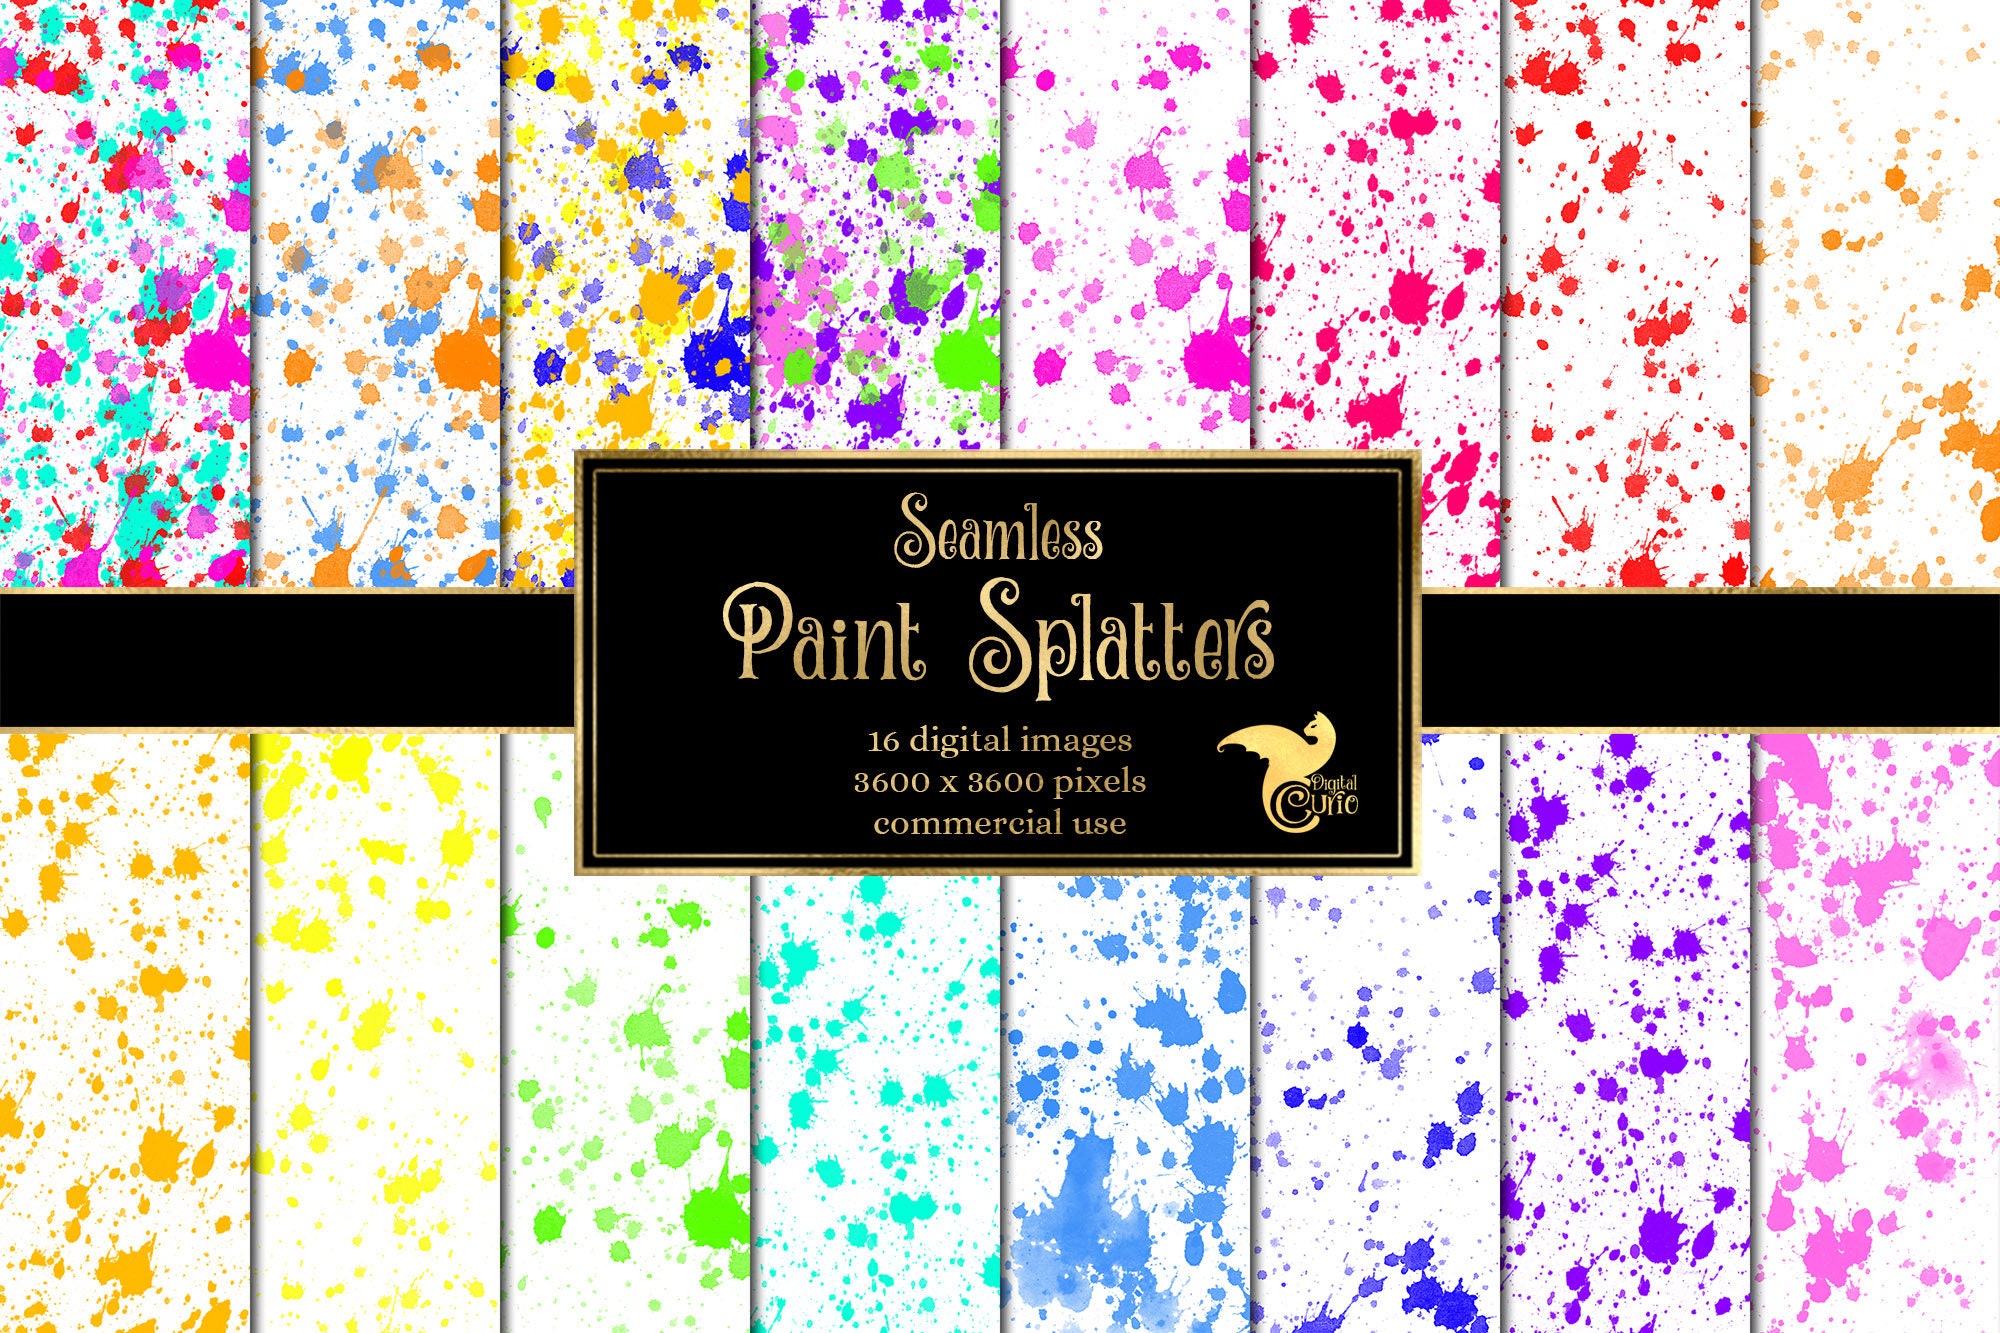 Iridescent Paint Splatters: Seamless Iridescent Paint Splatters